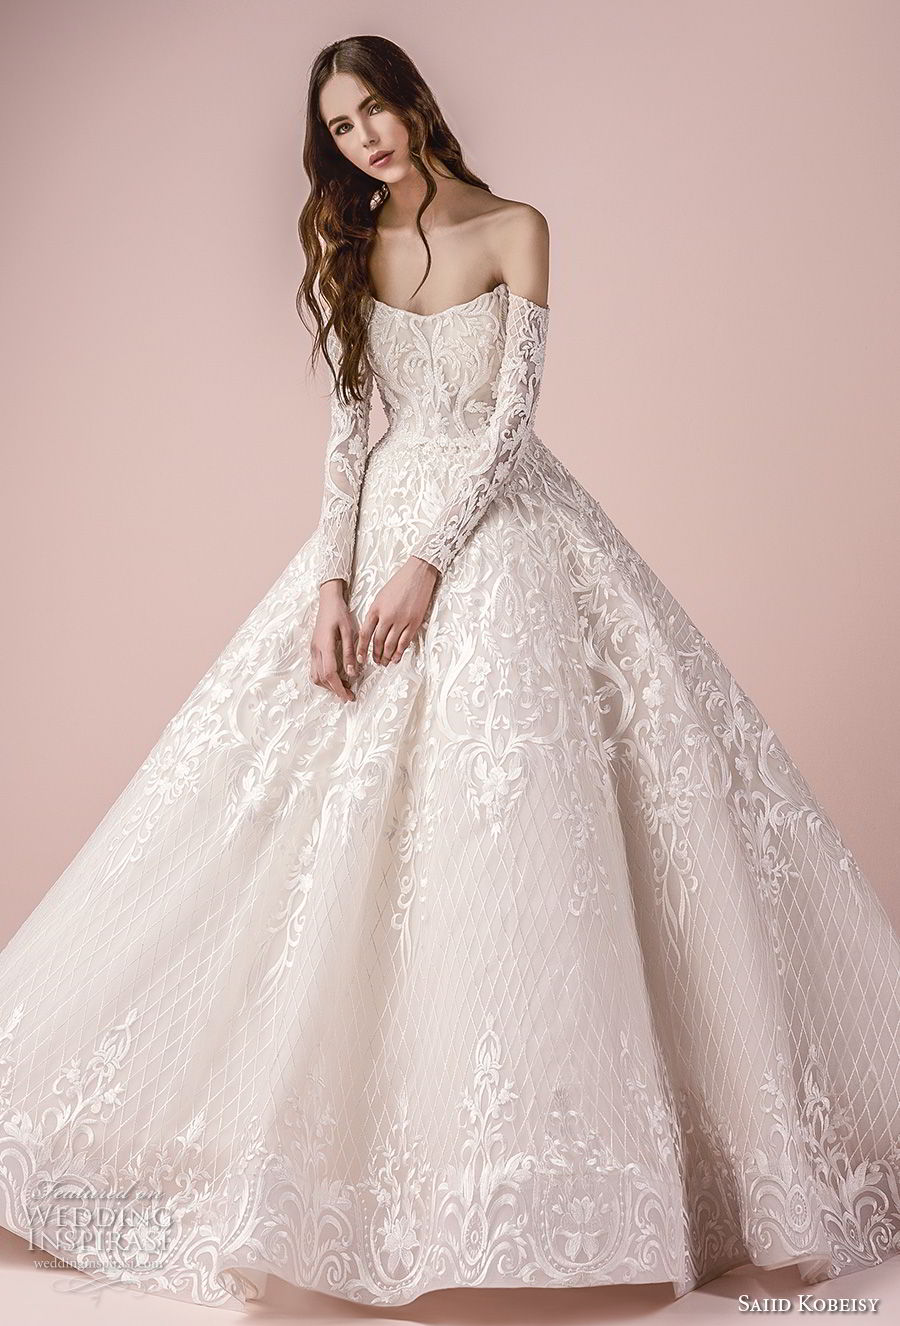 saiid kobeisy 2018 bridal long sleeves strapless off the shoulder v neck heavily embellished bodice princess ball gown wedding dress (3255) mv